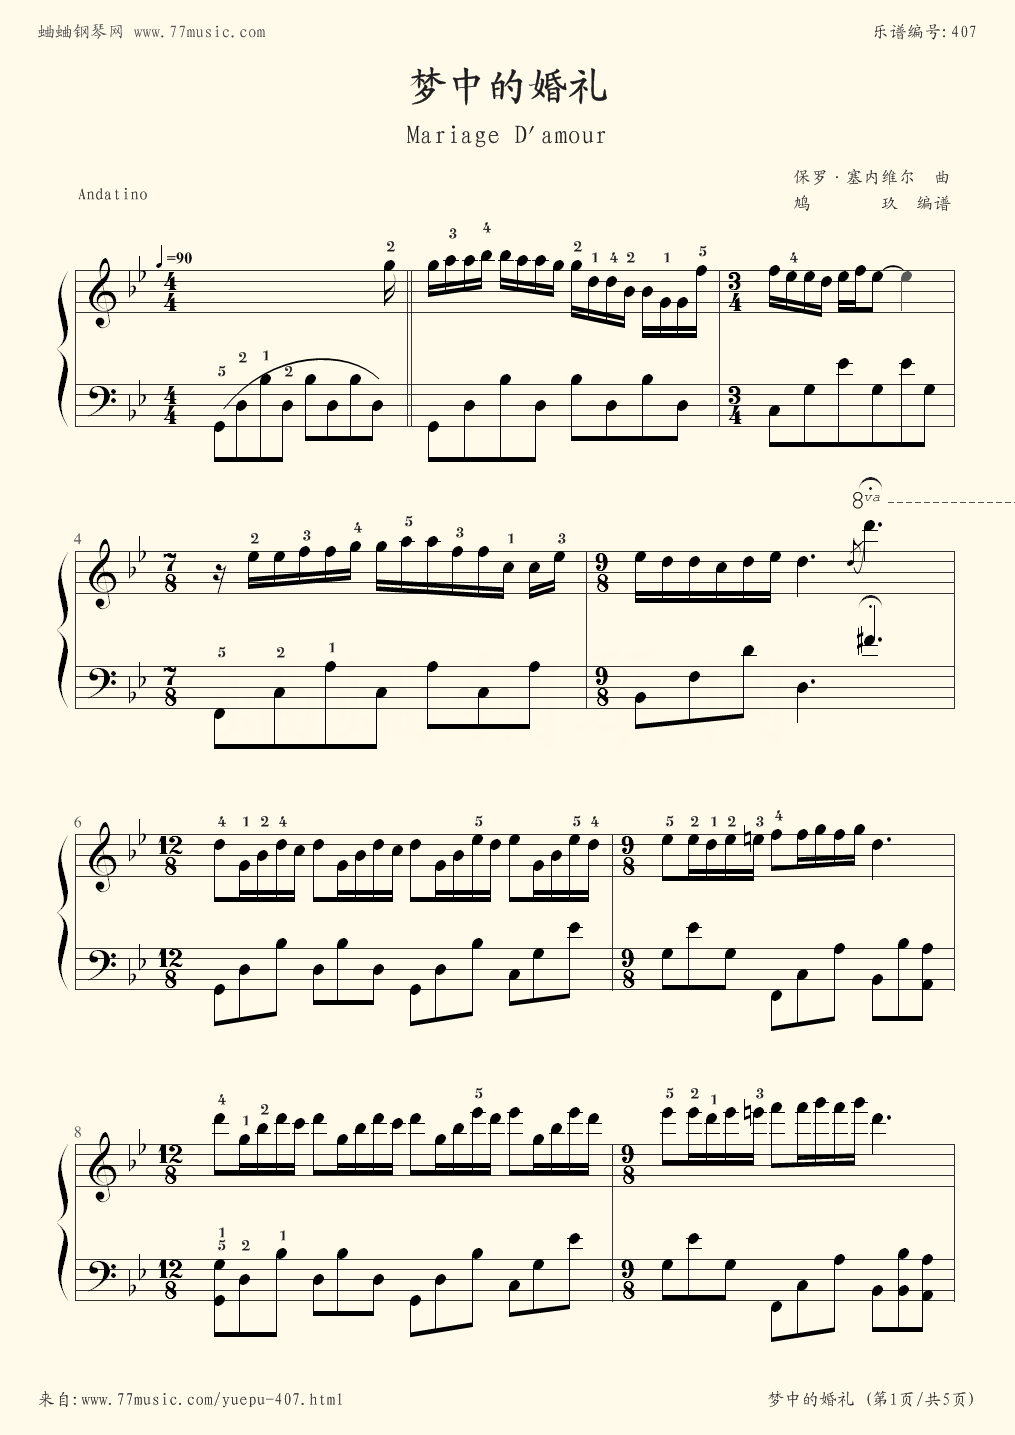 Mariage D'Amour - Richard Clayderman(Play Falsh) Piano Sheet Music Free